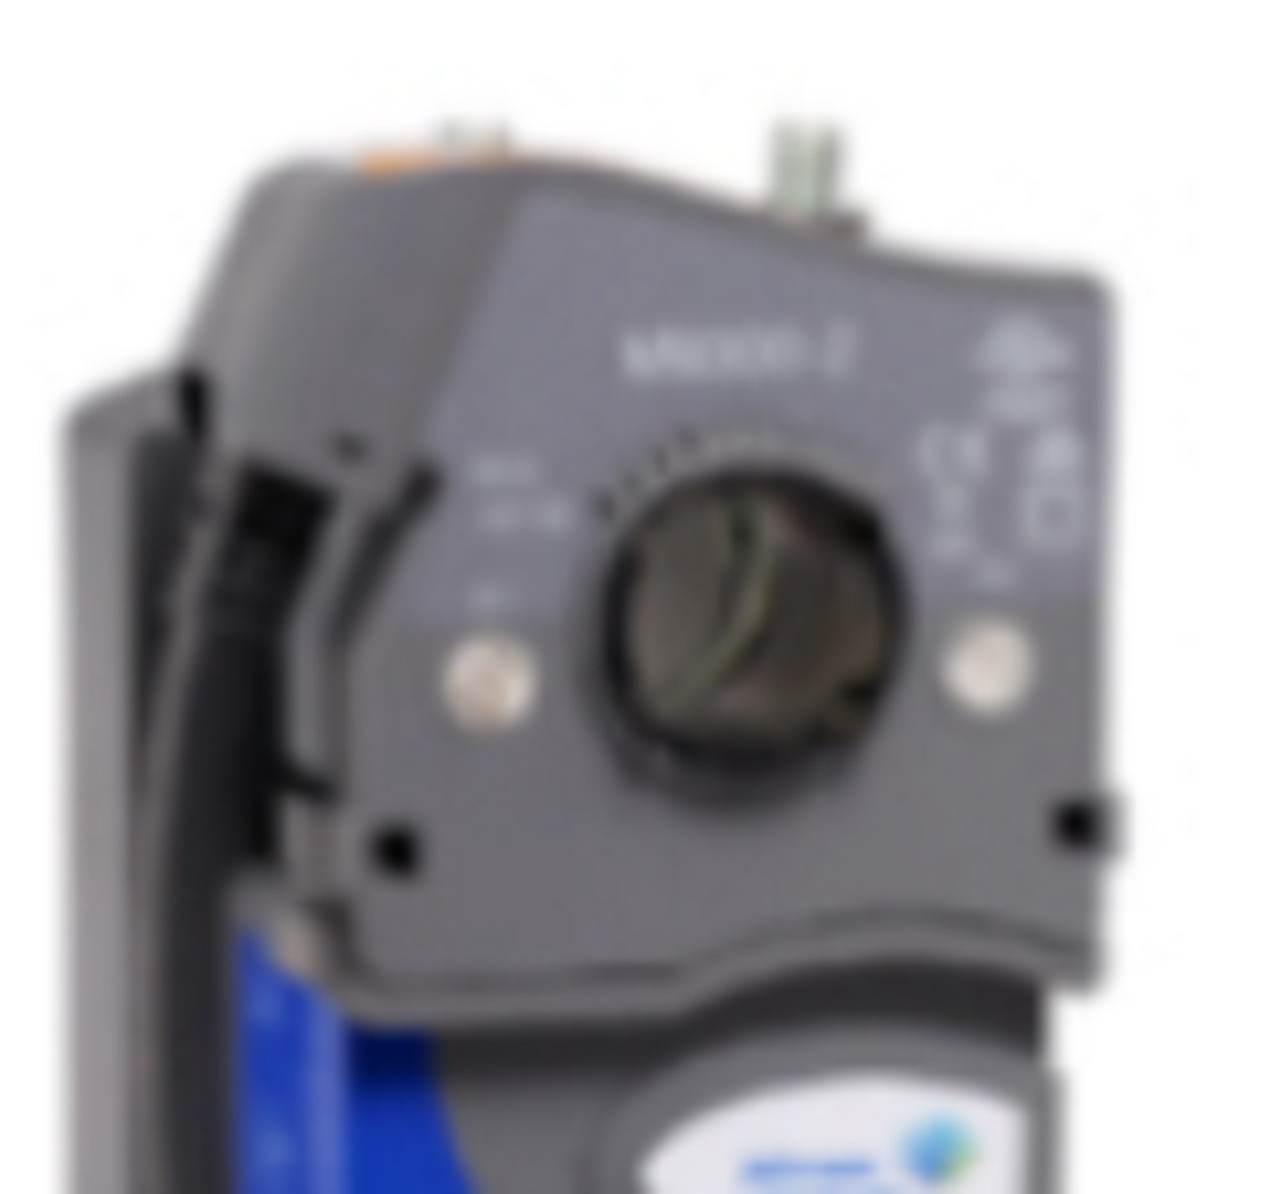 Johnson Controls M9300-10K External Feedback Potentiometer Kit, 10K Ohm [New]